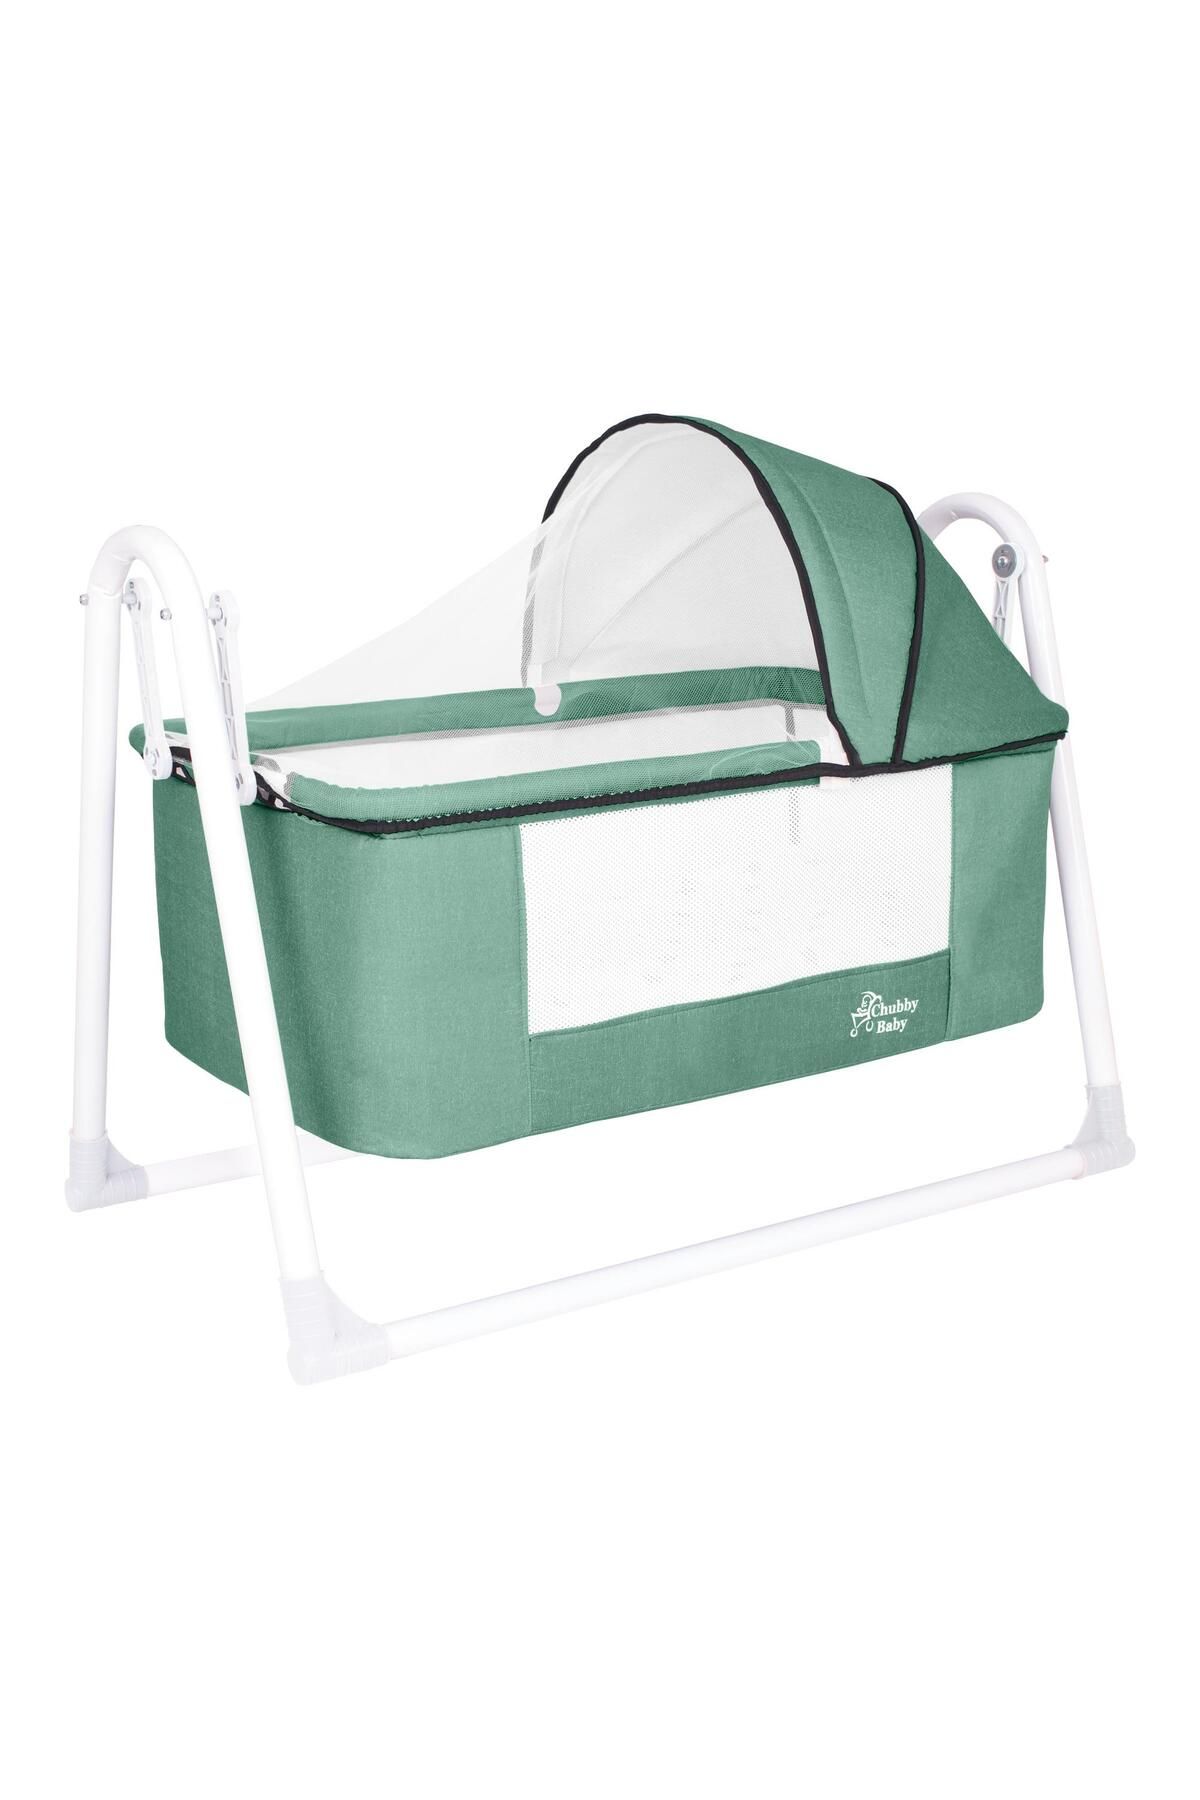 CHUBBY BABY First Class Portatif-Keten Tenteli Sepet Beşik Silinebilir Kumaş Yeşil